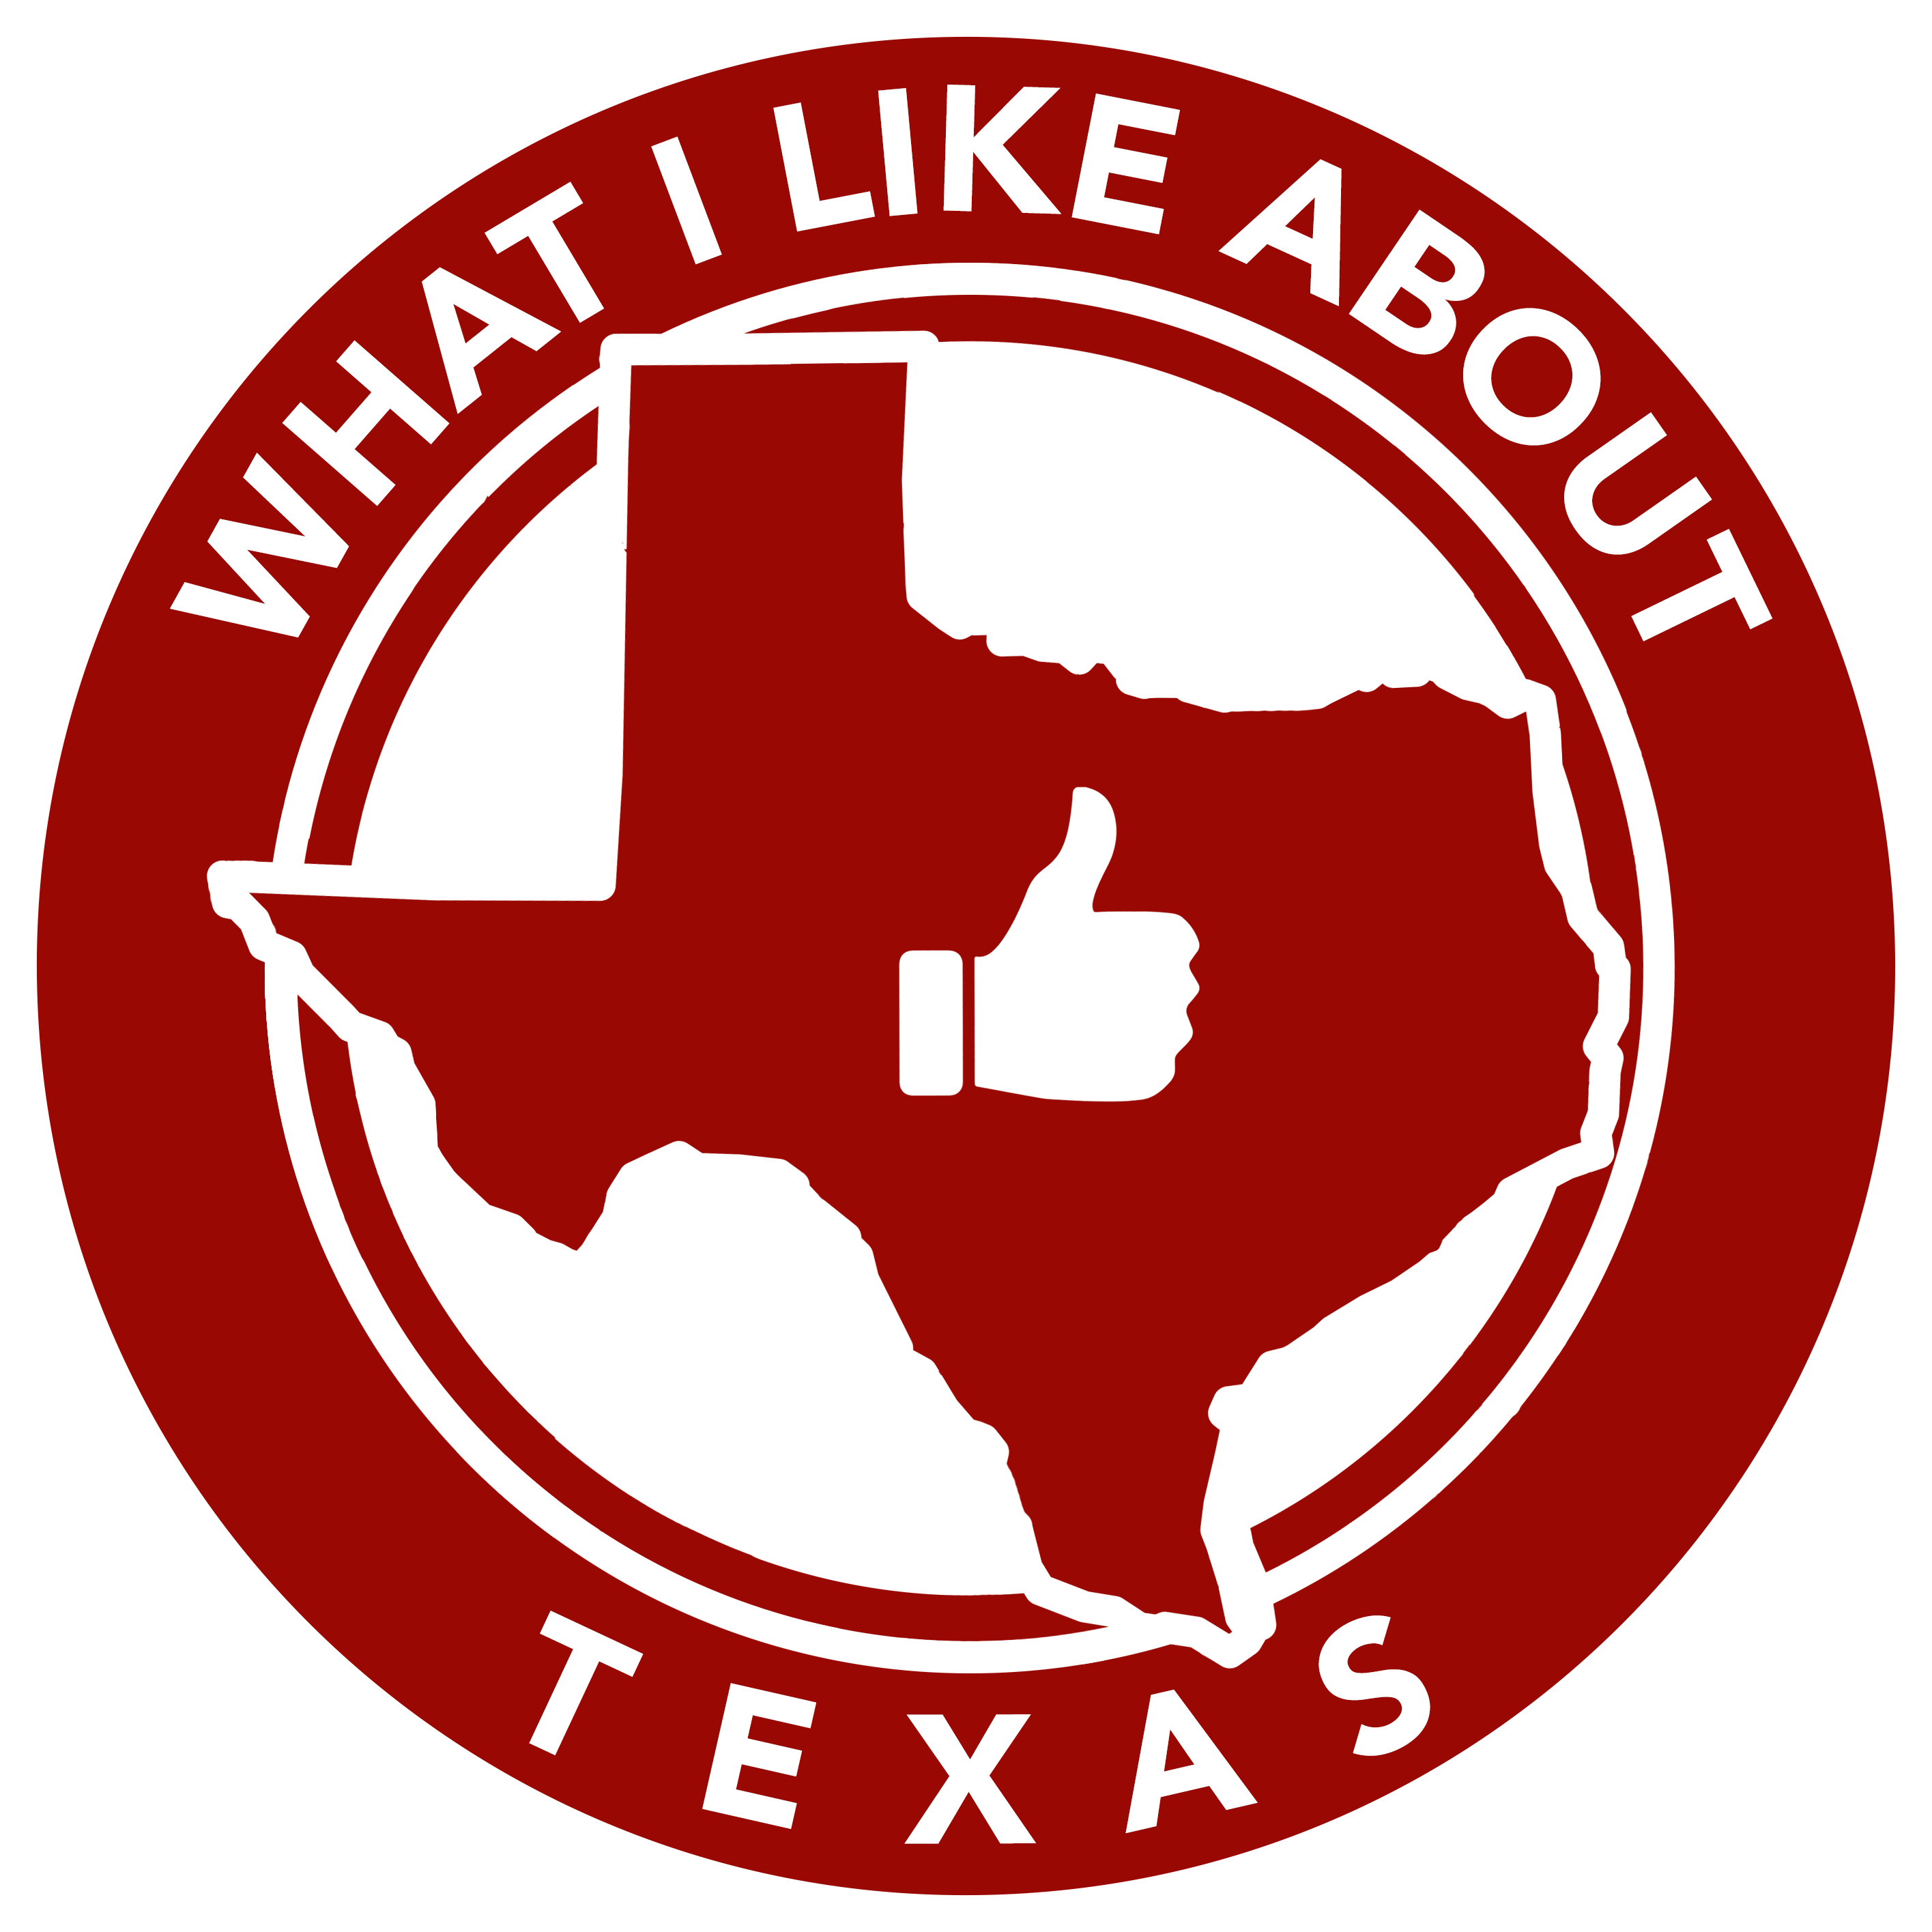 texas travel industry association